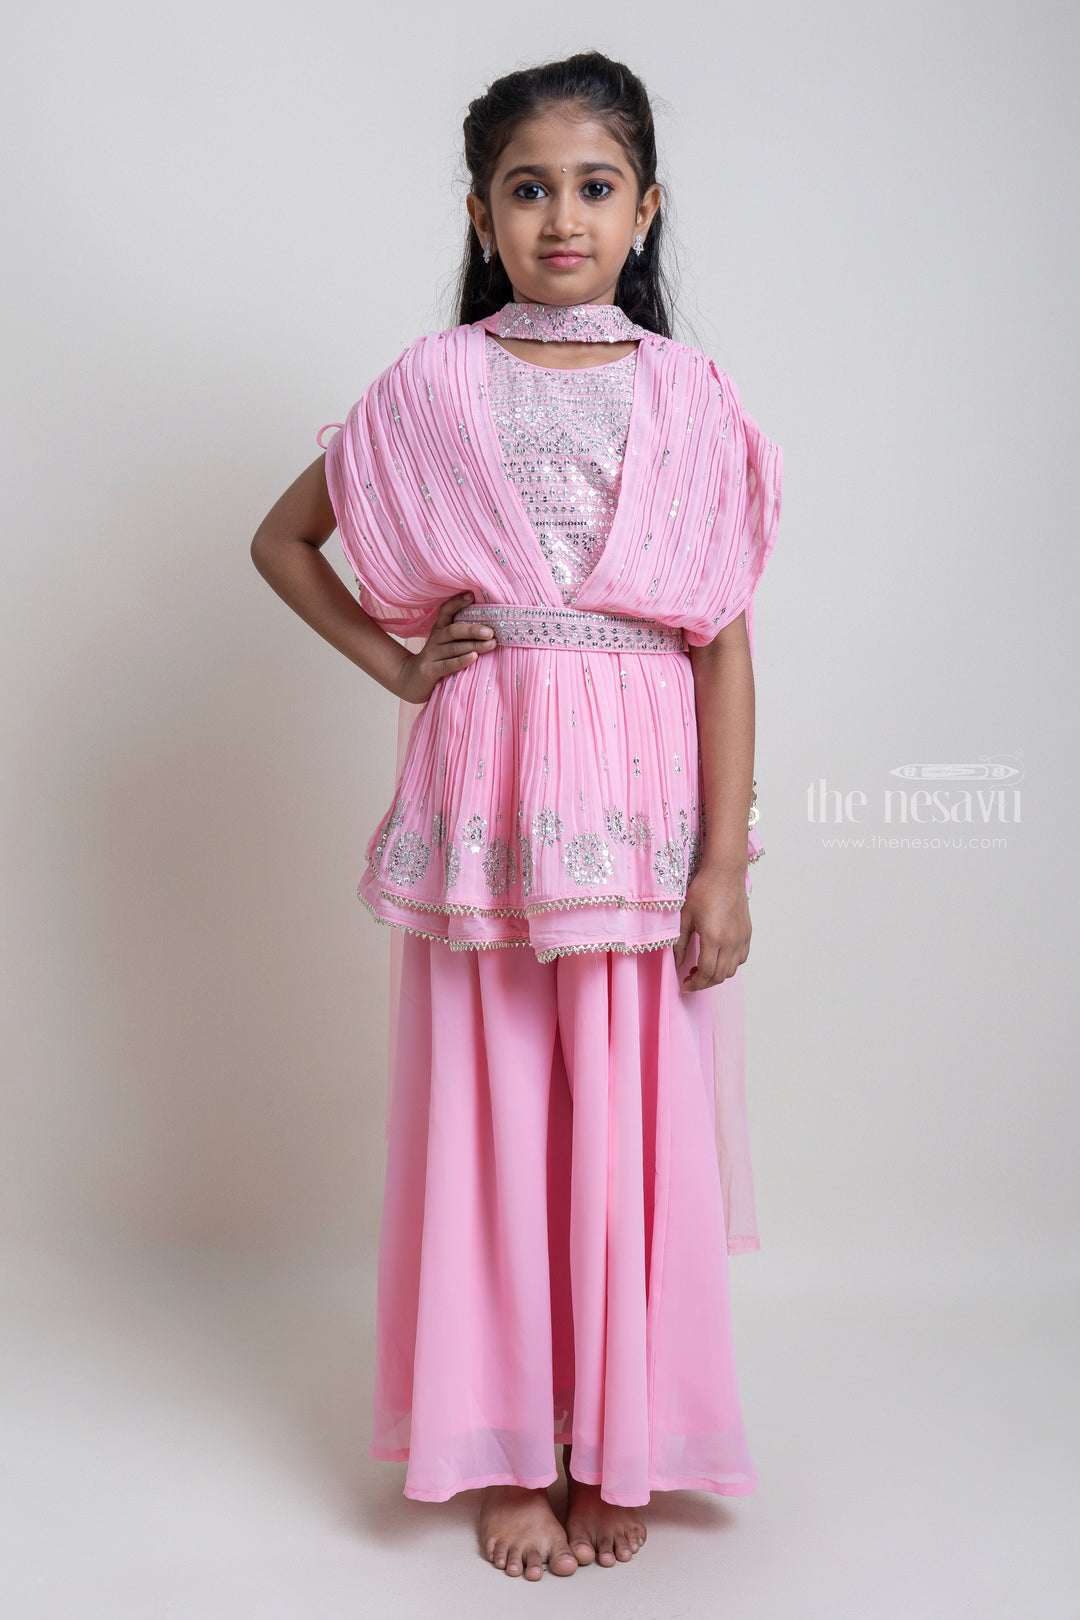 The Nesavu Girls Sharara / Plazo Set Elegant Salmon Pink Floral Designer Embroidery Tunic Tops And Palazzo Suit Sets For Girls Nesavu 24 (5Y) / Pink GPS123A-24 Pink Palazzo Designer Suit For Girls | Elegant Wear For Girls | The Nesavu